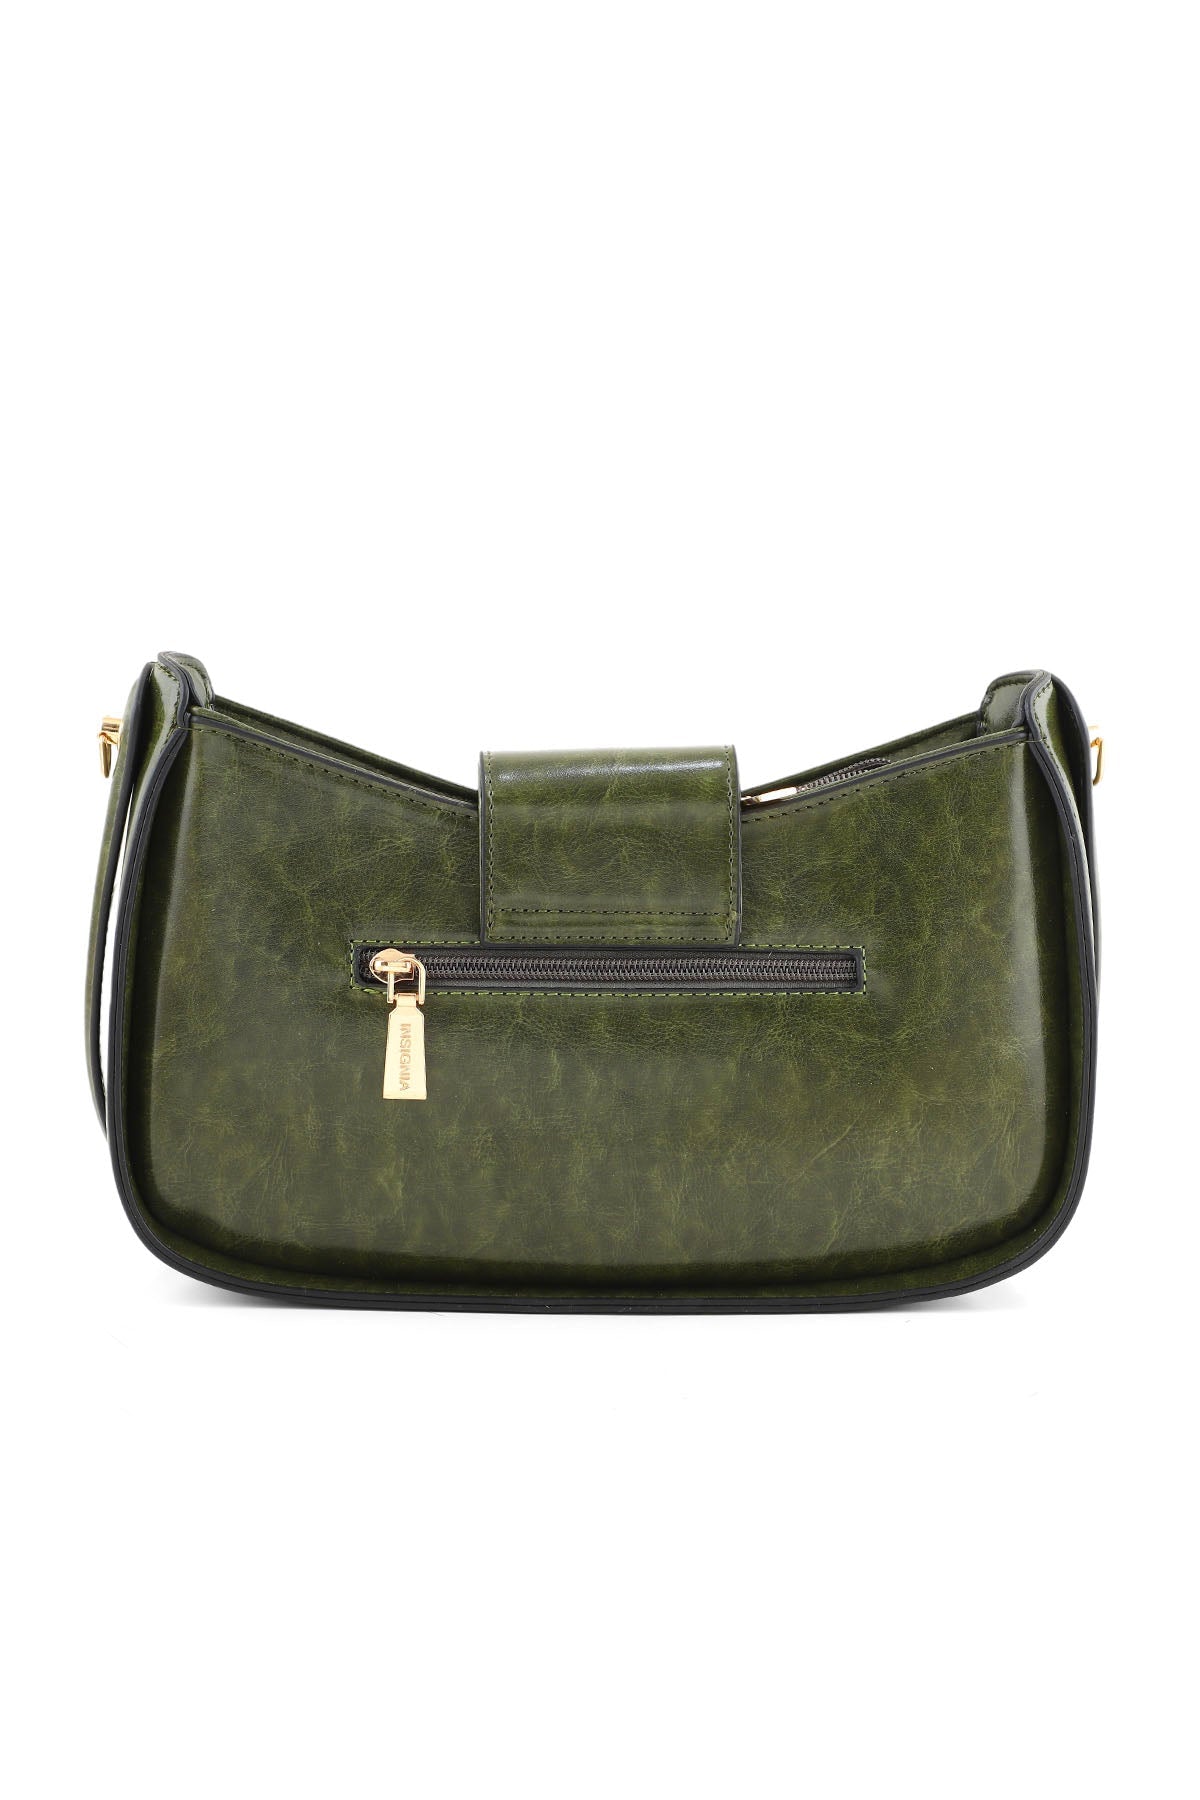 Hobo Hand Bags B14974-Green